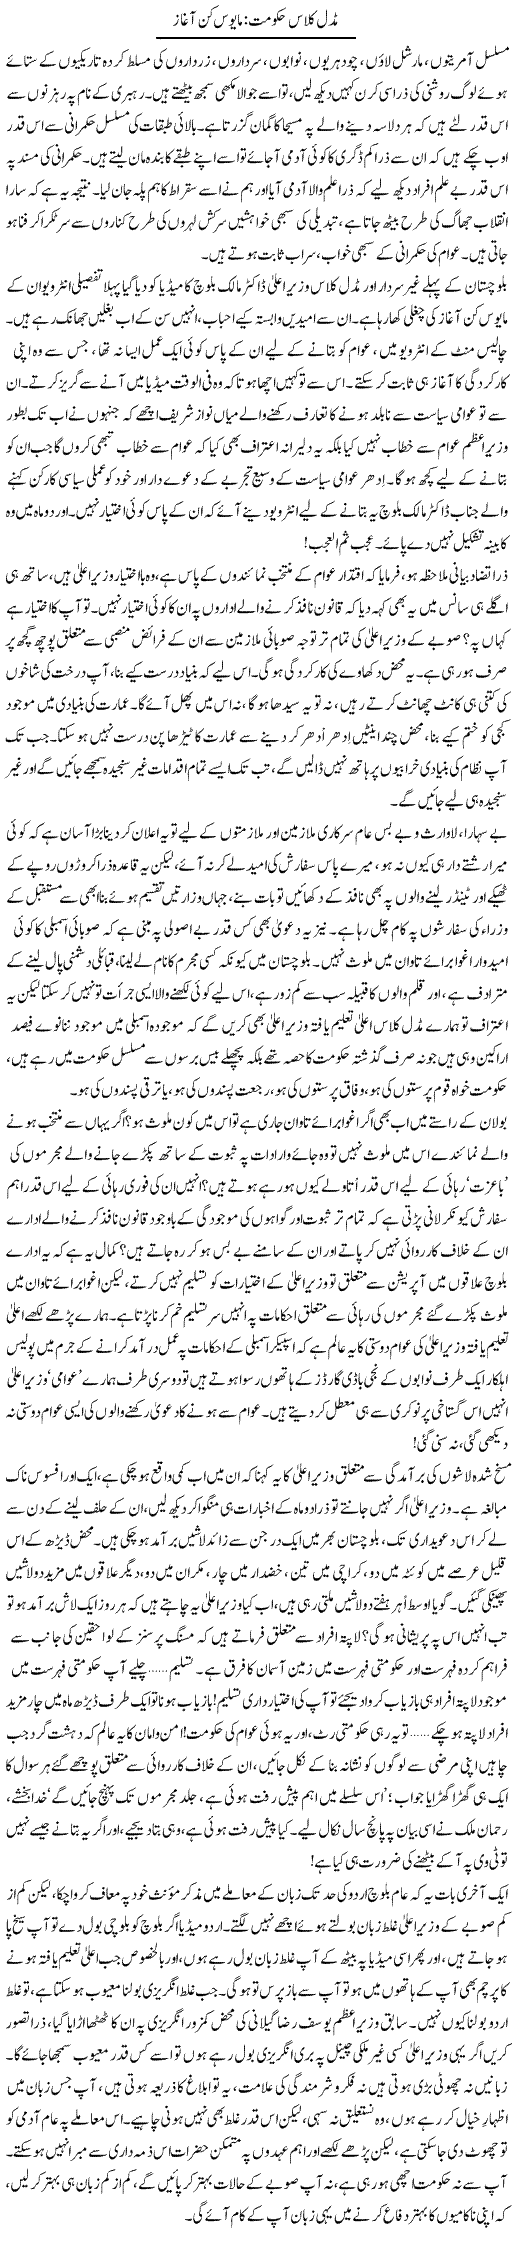 Midal Class Hakomat Mayoos Kun Aghaz | Abid Mir | Daily Urdu Columns